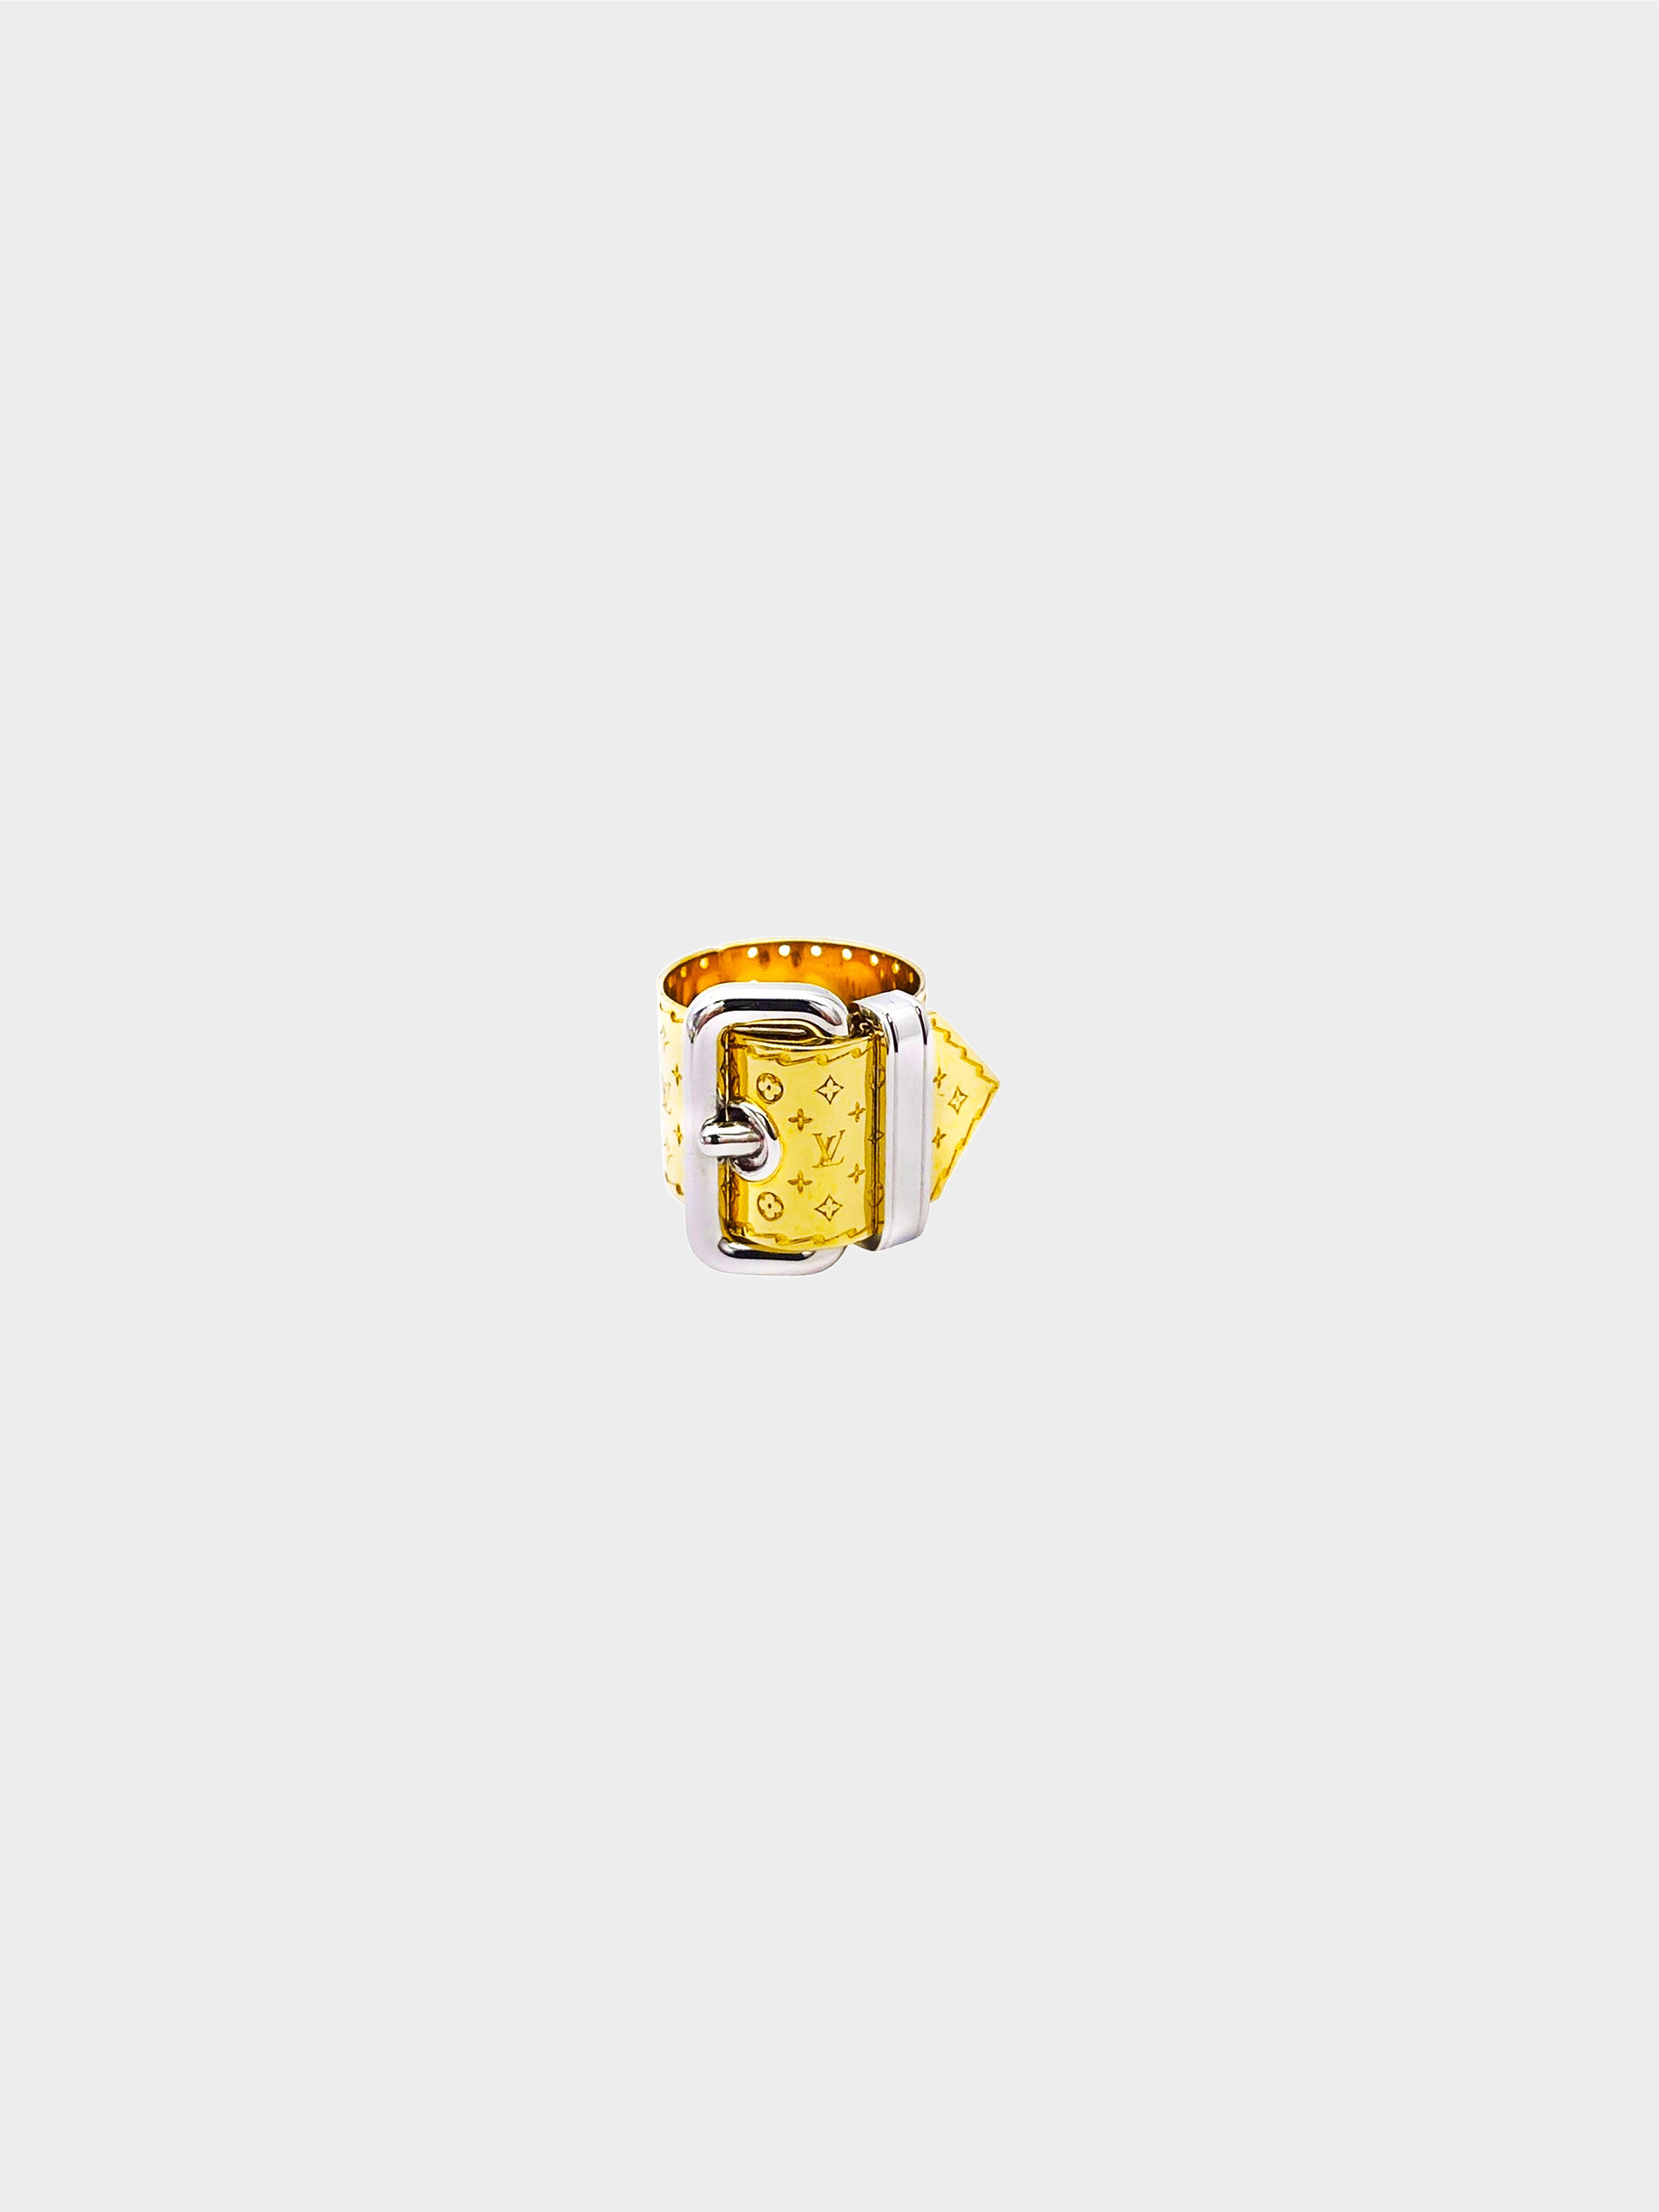 Louis Vuitton Silver Monogram Ring - Size 7.5